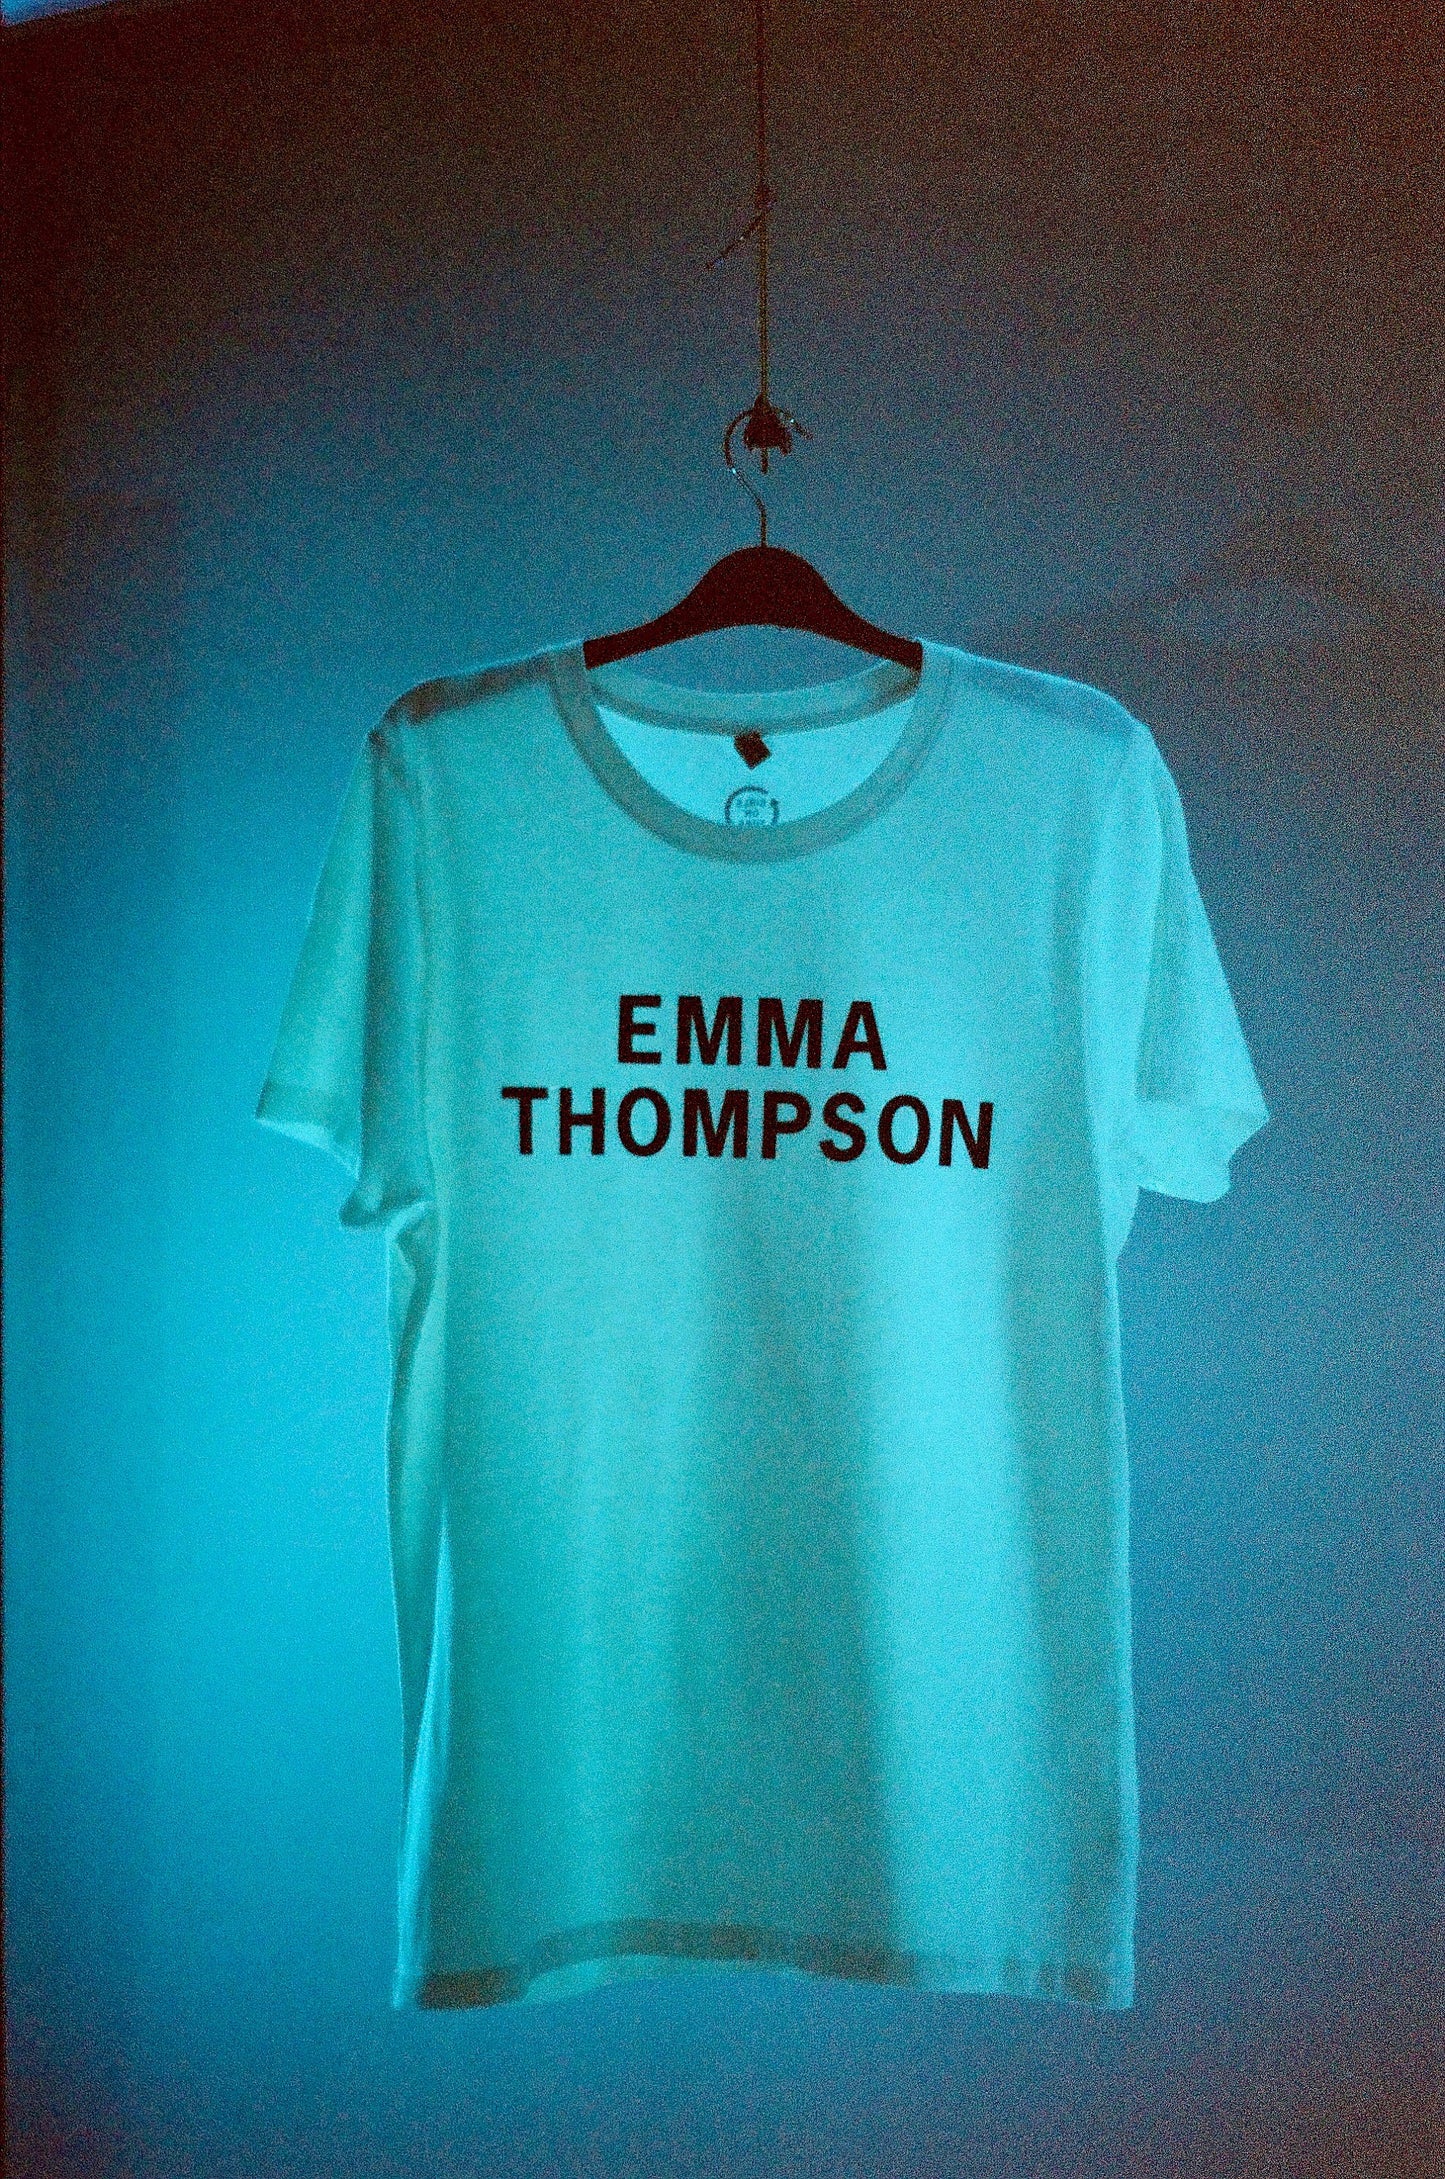 EMMA THOMPSON